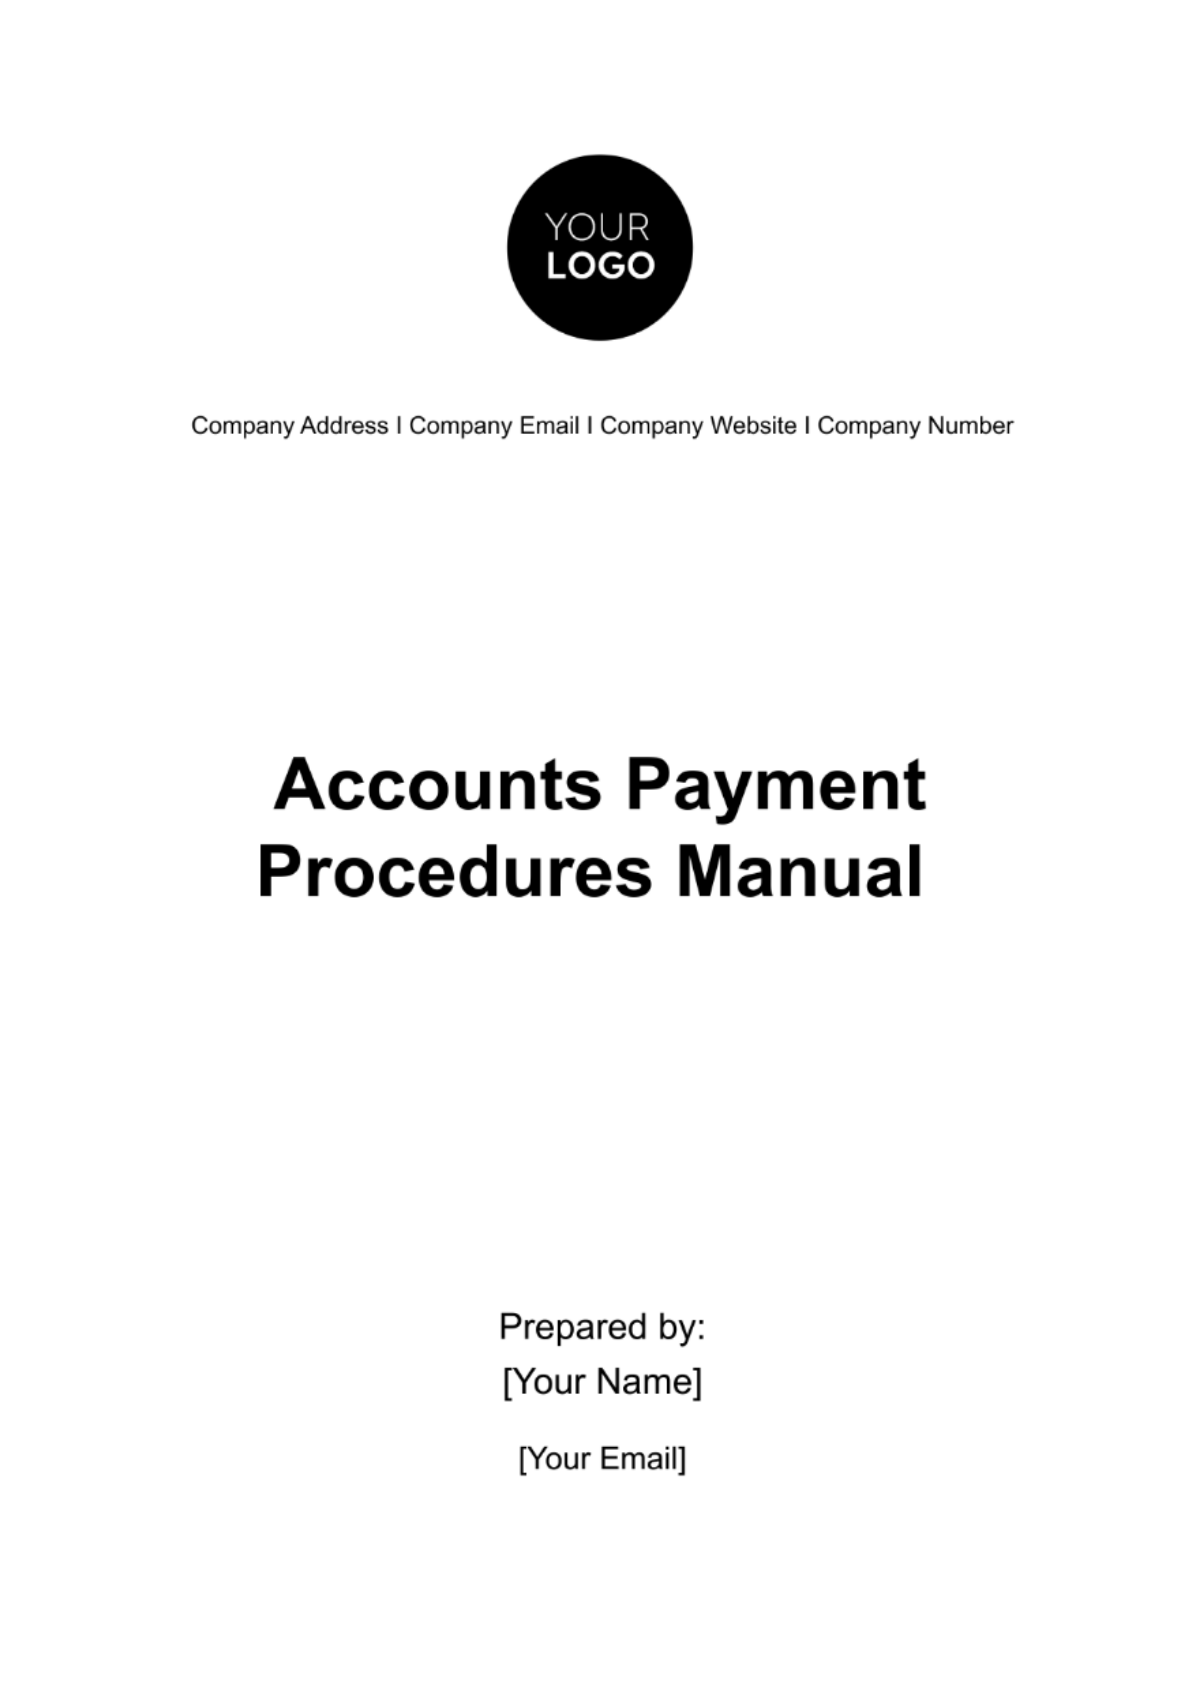 Accounts Payment Procedures Manual Template